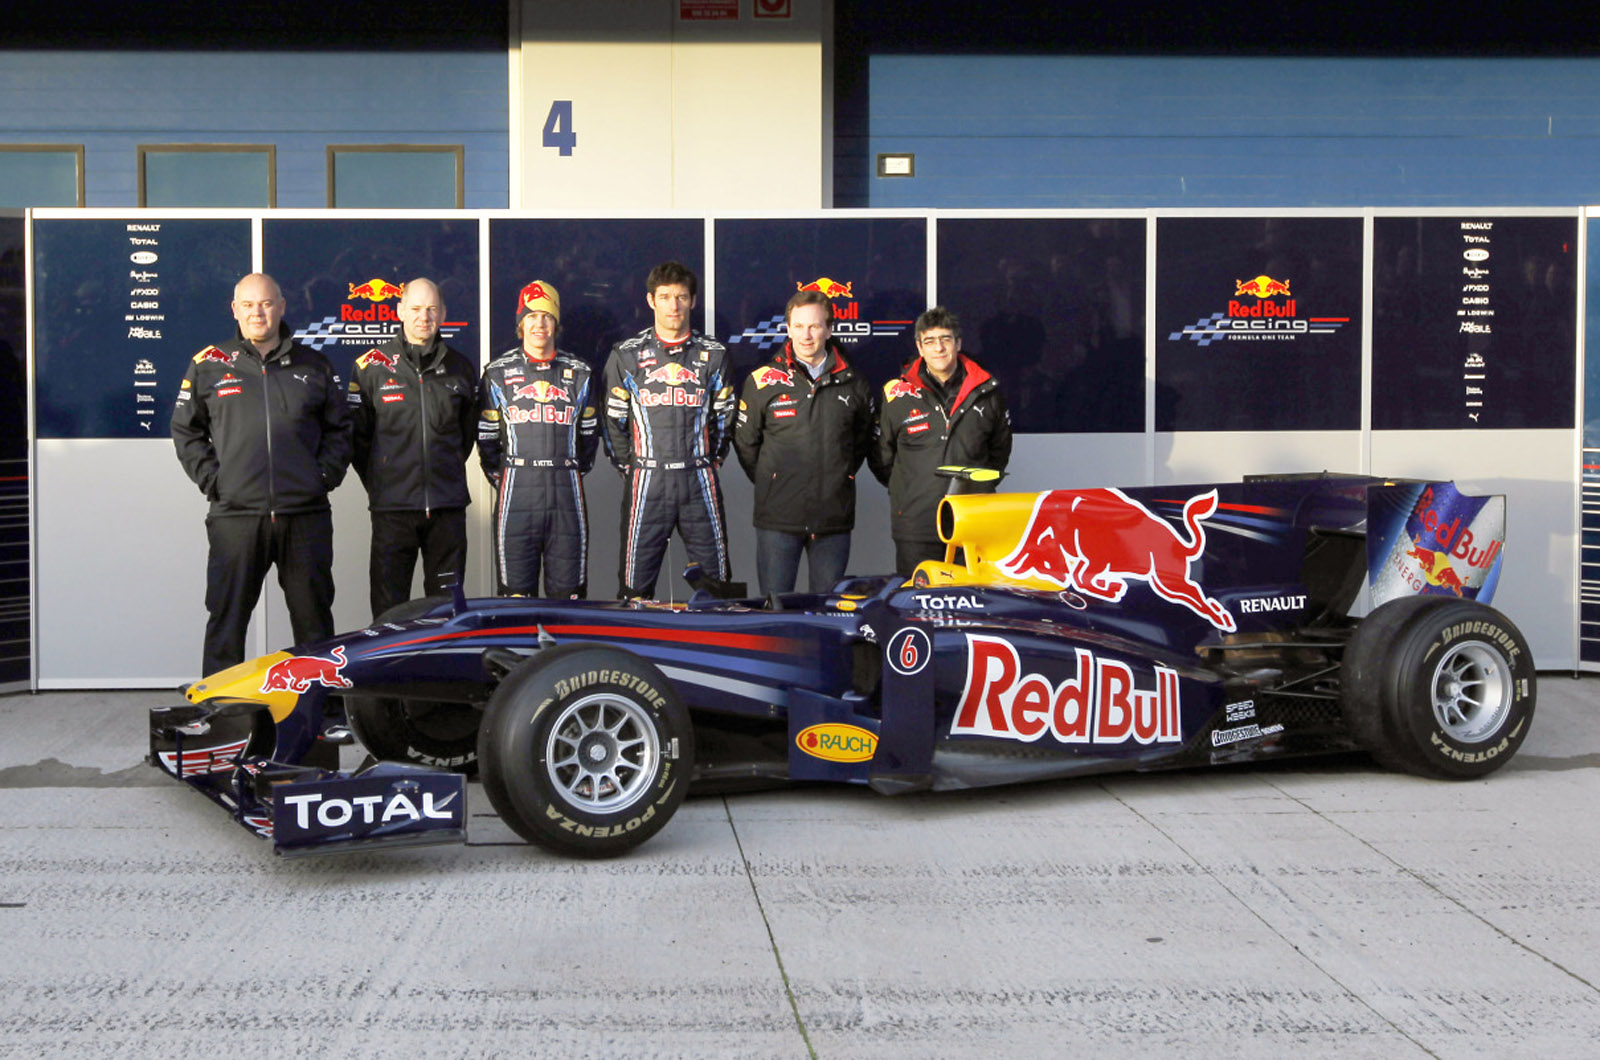 uvidenhed Yoghurt Långiver Red Bull reveals RB6 F1 car | Autocar